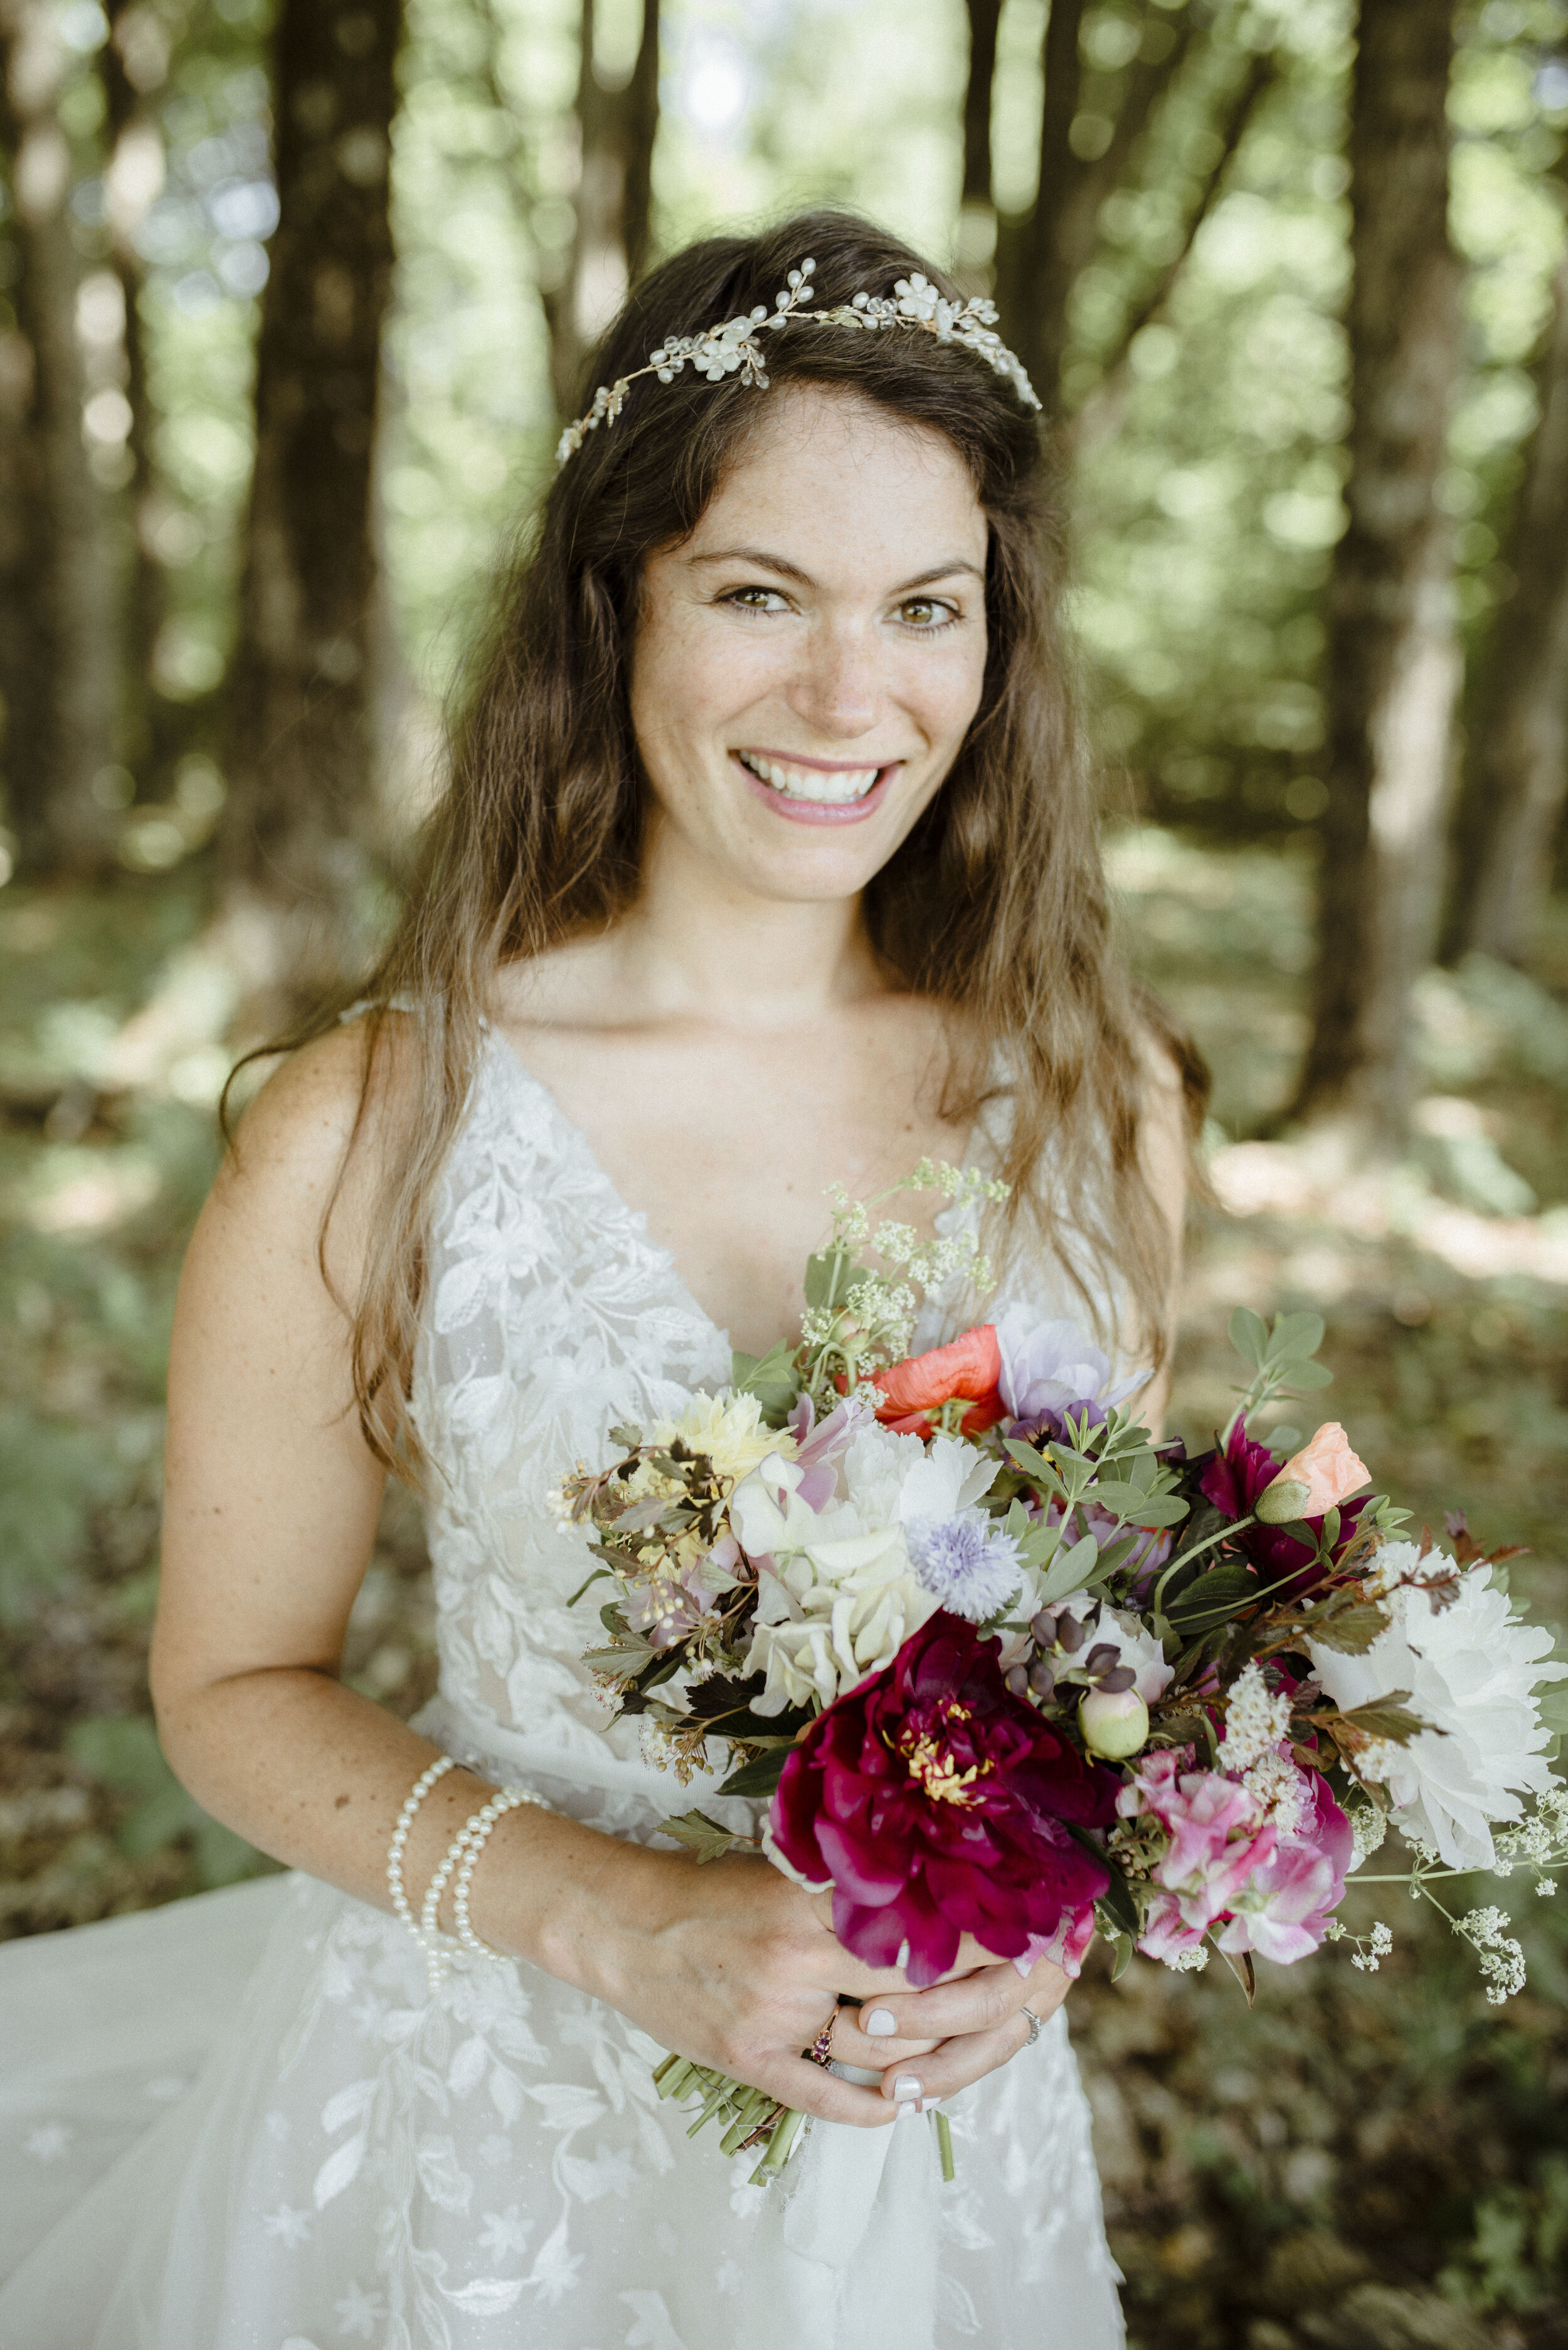 Woodstock Vermont wedding photographer. Stitchdown Farm wedding flowers